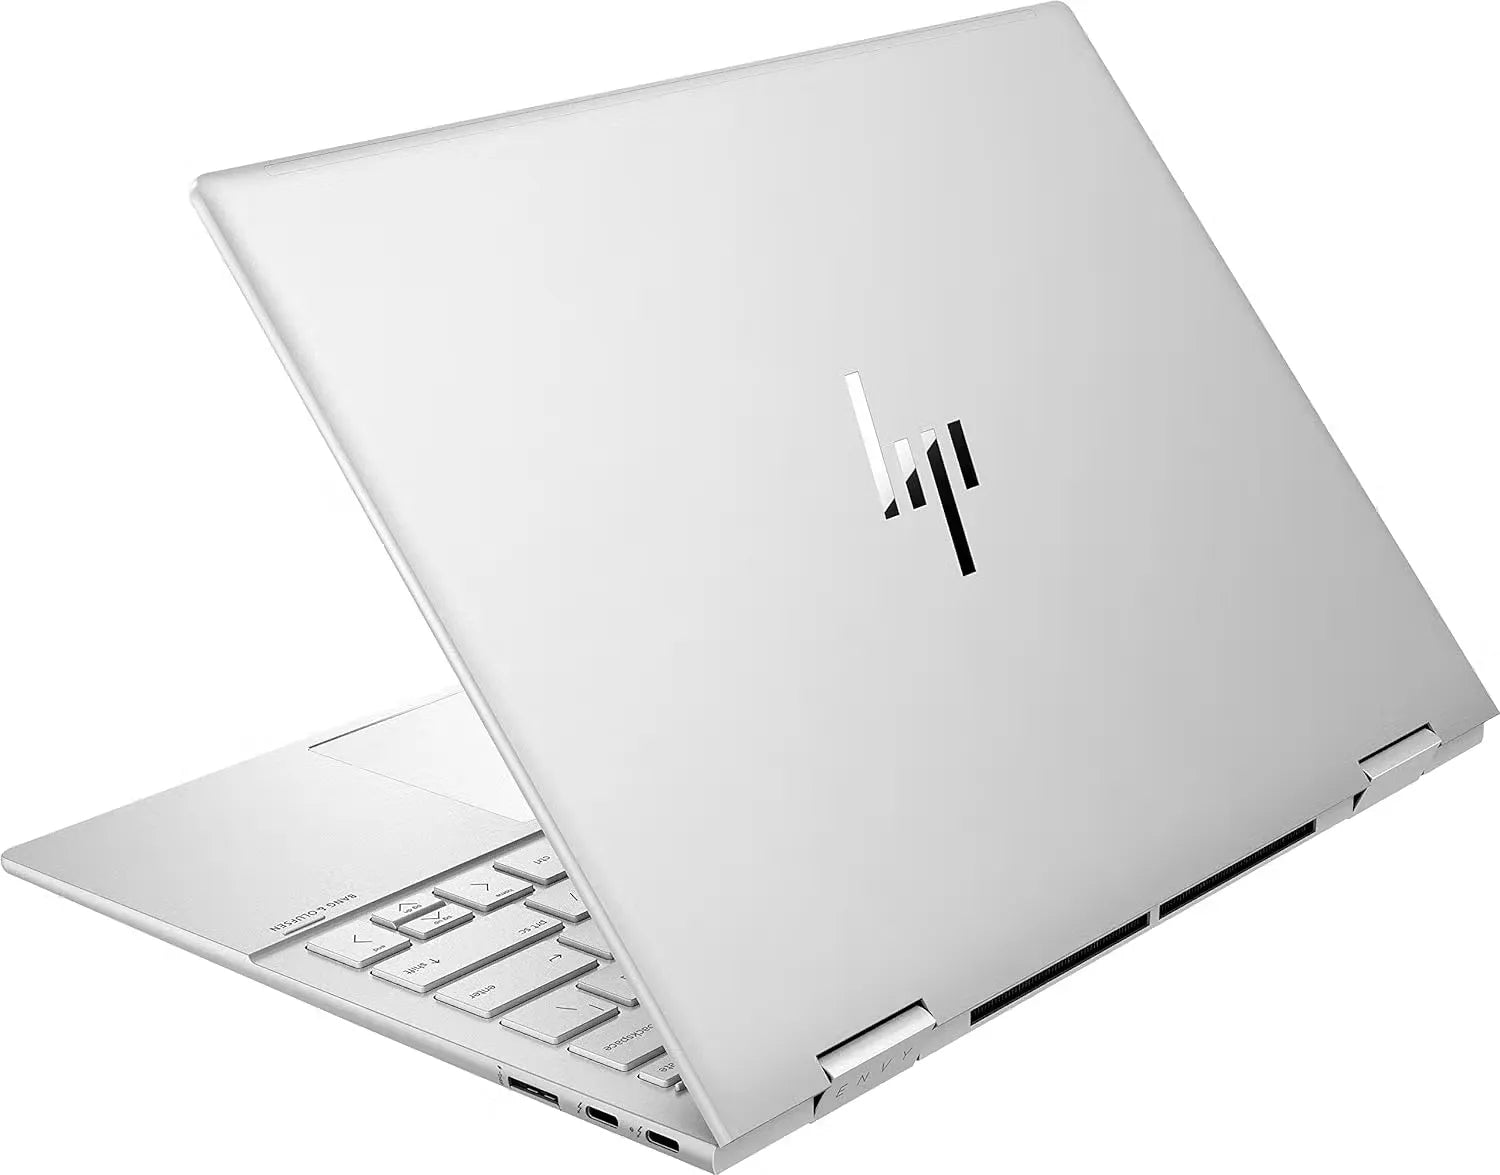 HP Envy 12th Gen Intel Core i7 Laptop - 16GB RAM and 512GB Storage